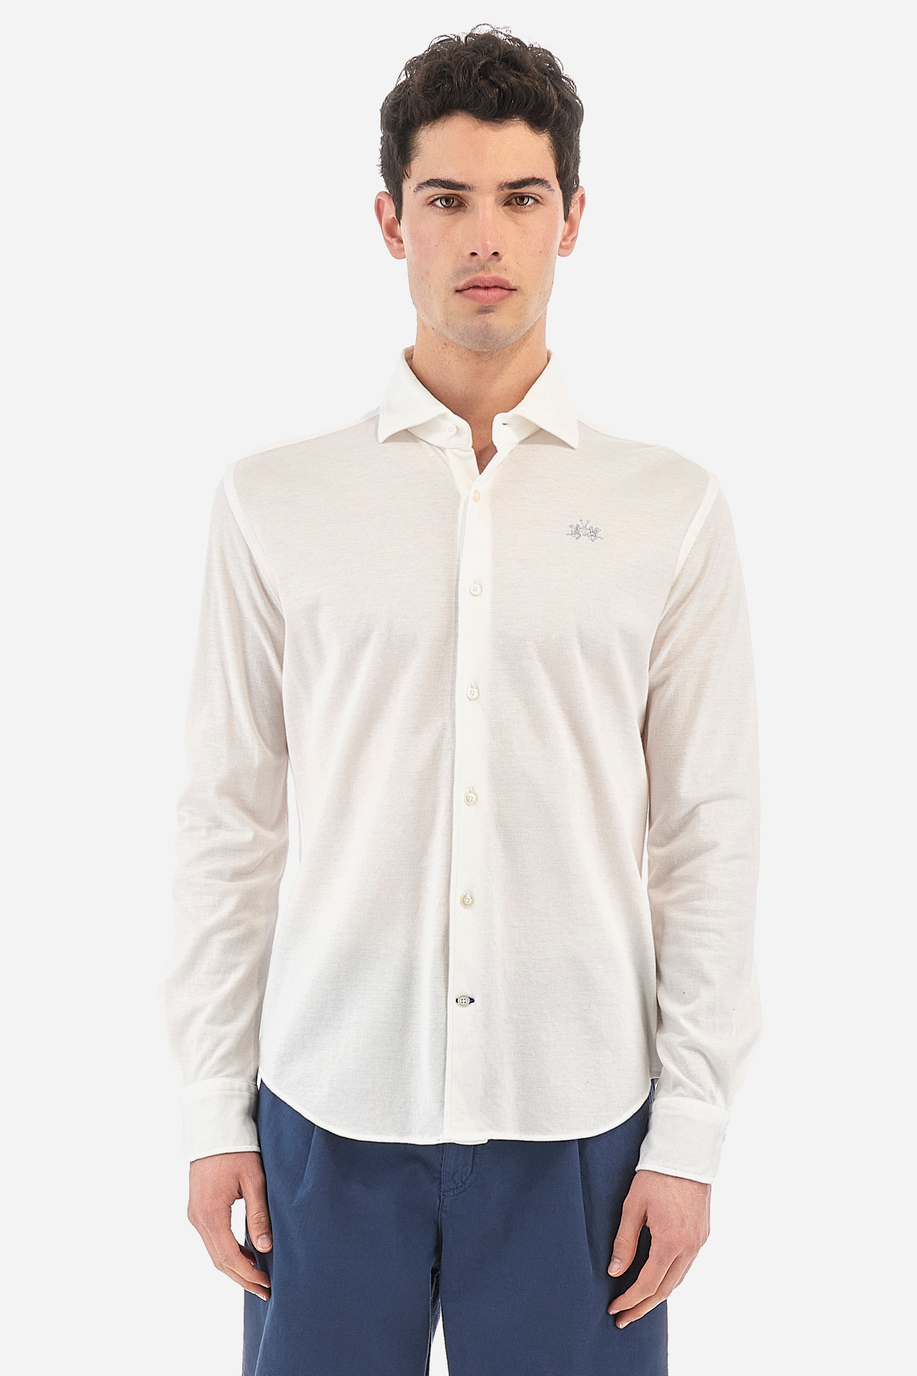 Camicia da uomo in cotone piqué maniche lunghe custom fit - Qalam - Camicie | La Martina - Official Online Shop